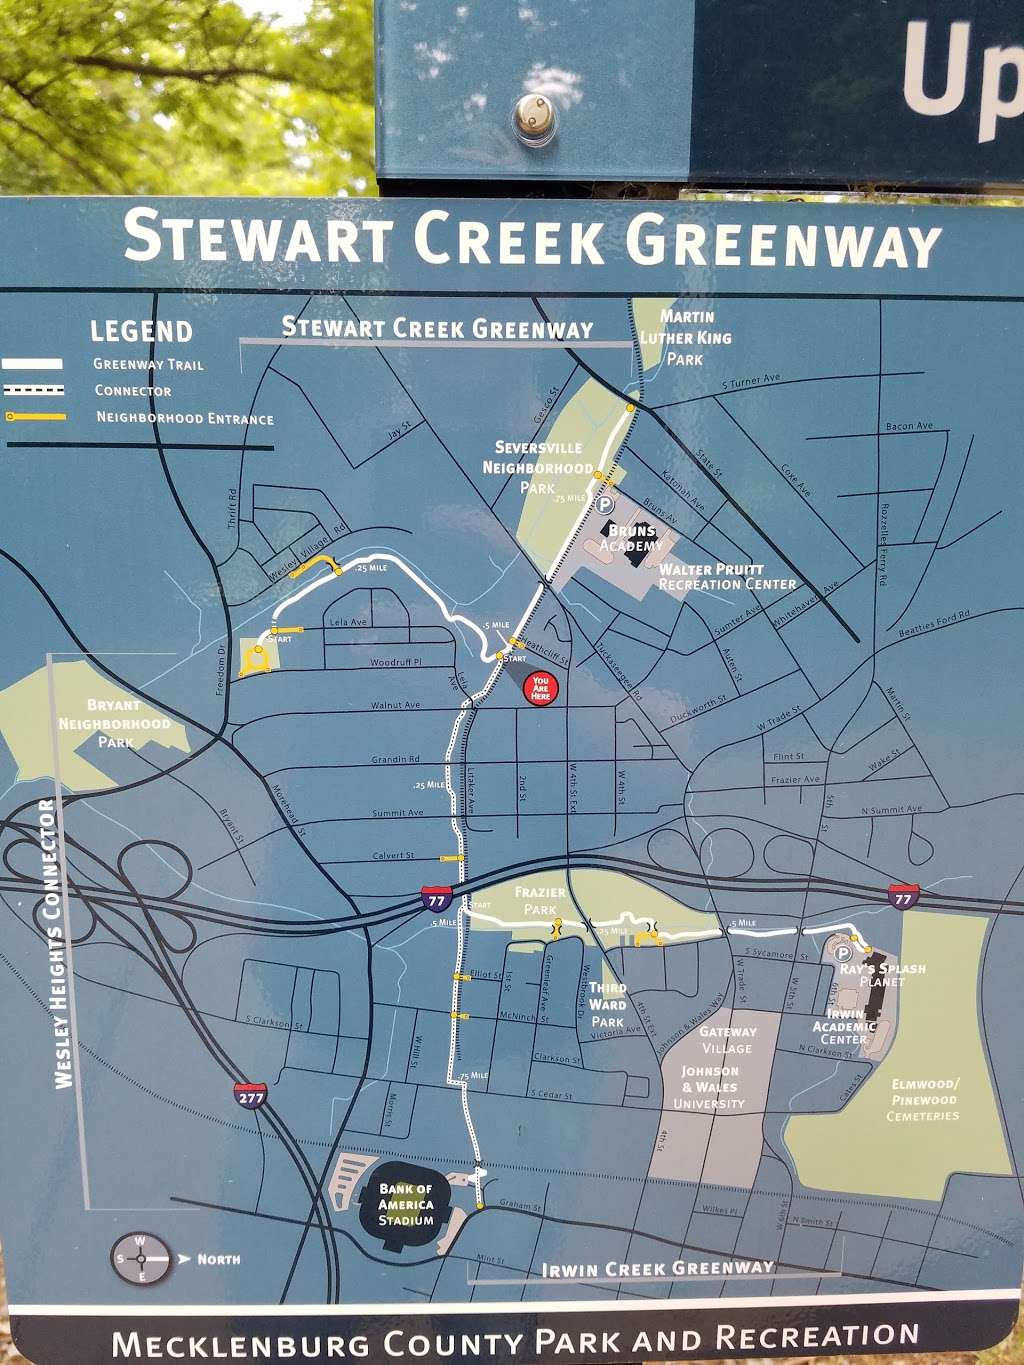 Irwin Creek and Stewart Creek Greenway Trailhead 2 | Heathcliff St, Charlotte, NC 28208 | Phone: (704) 376-2556